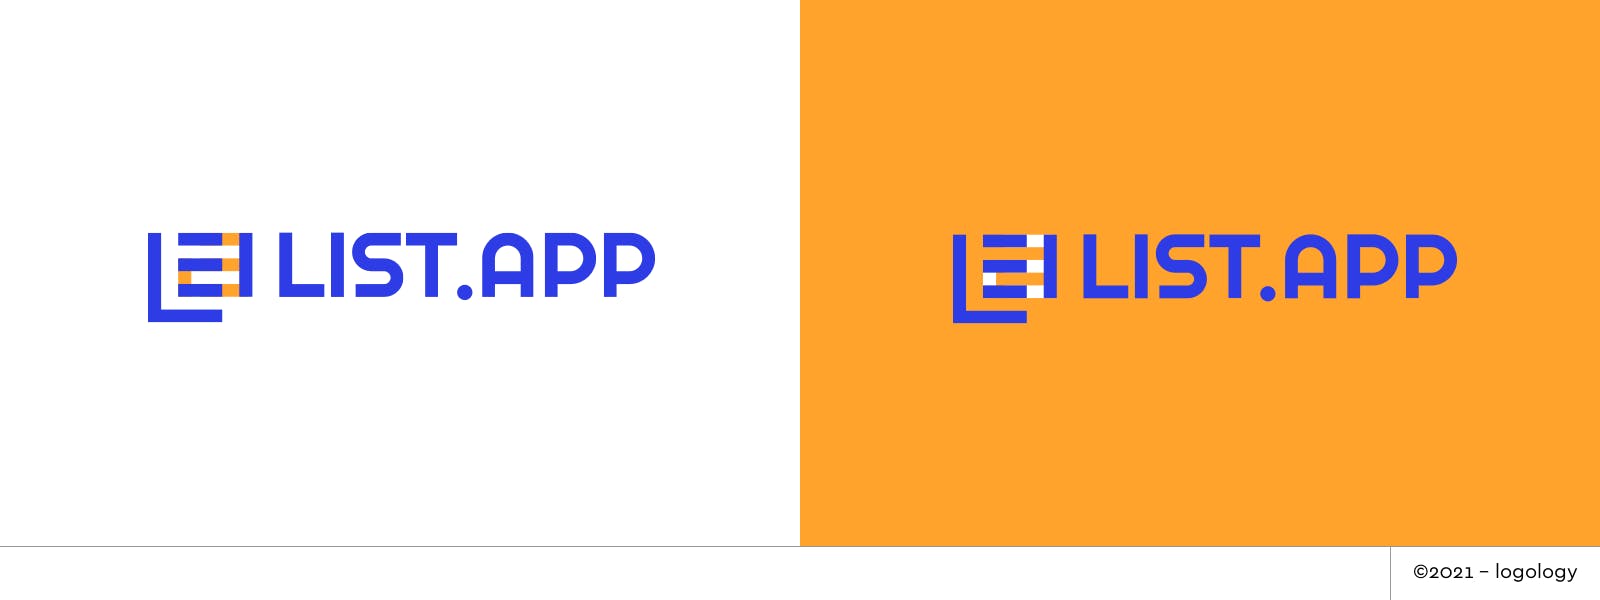 list.app logo proposal 1 variant